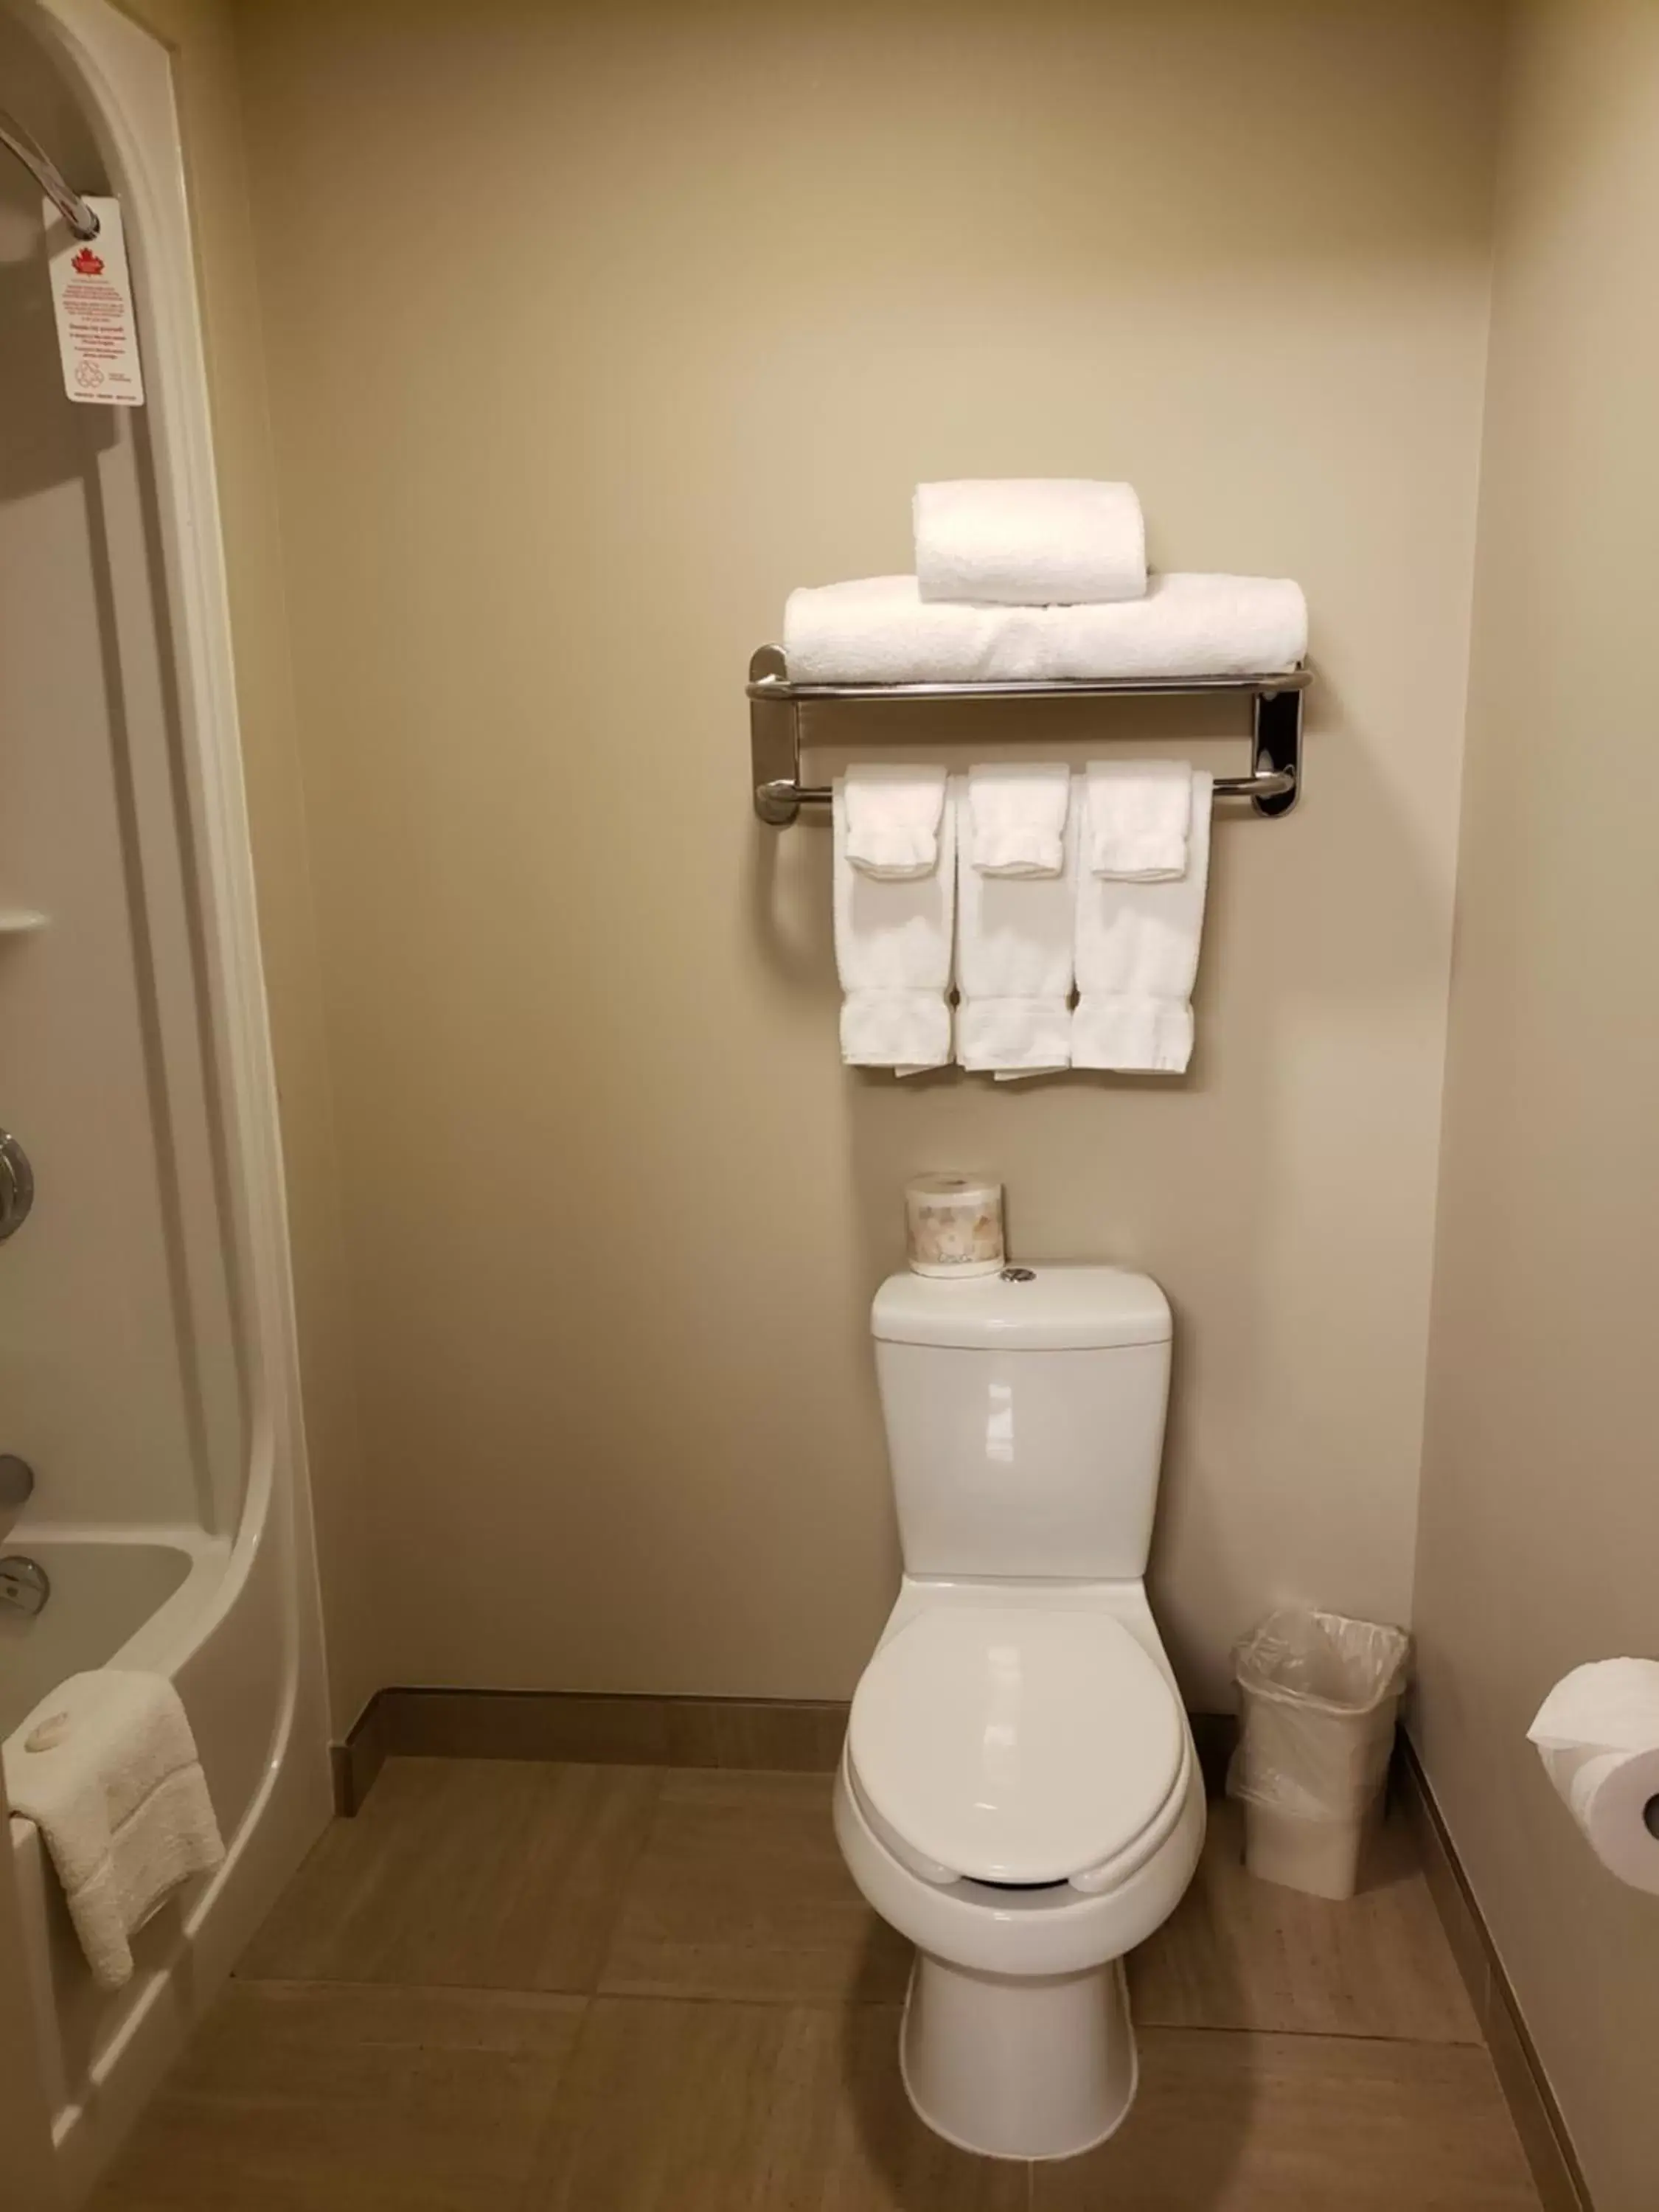 Bathroom in Canad Inns Health Sciences Centre